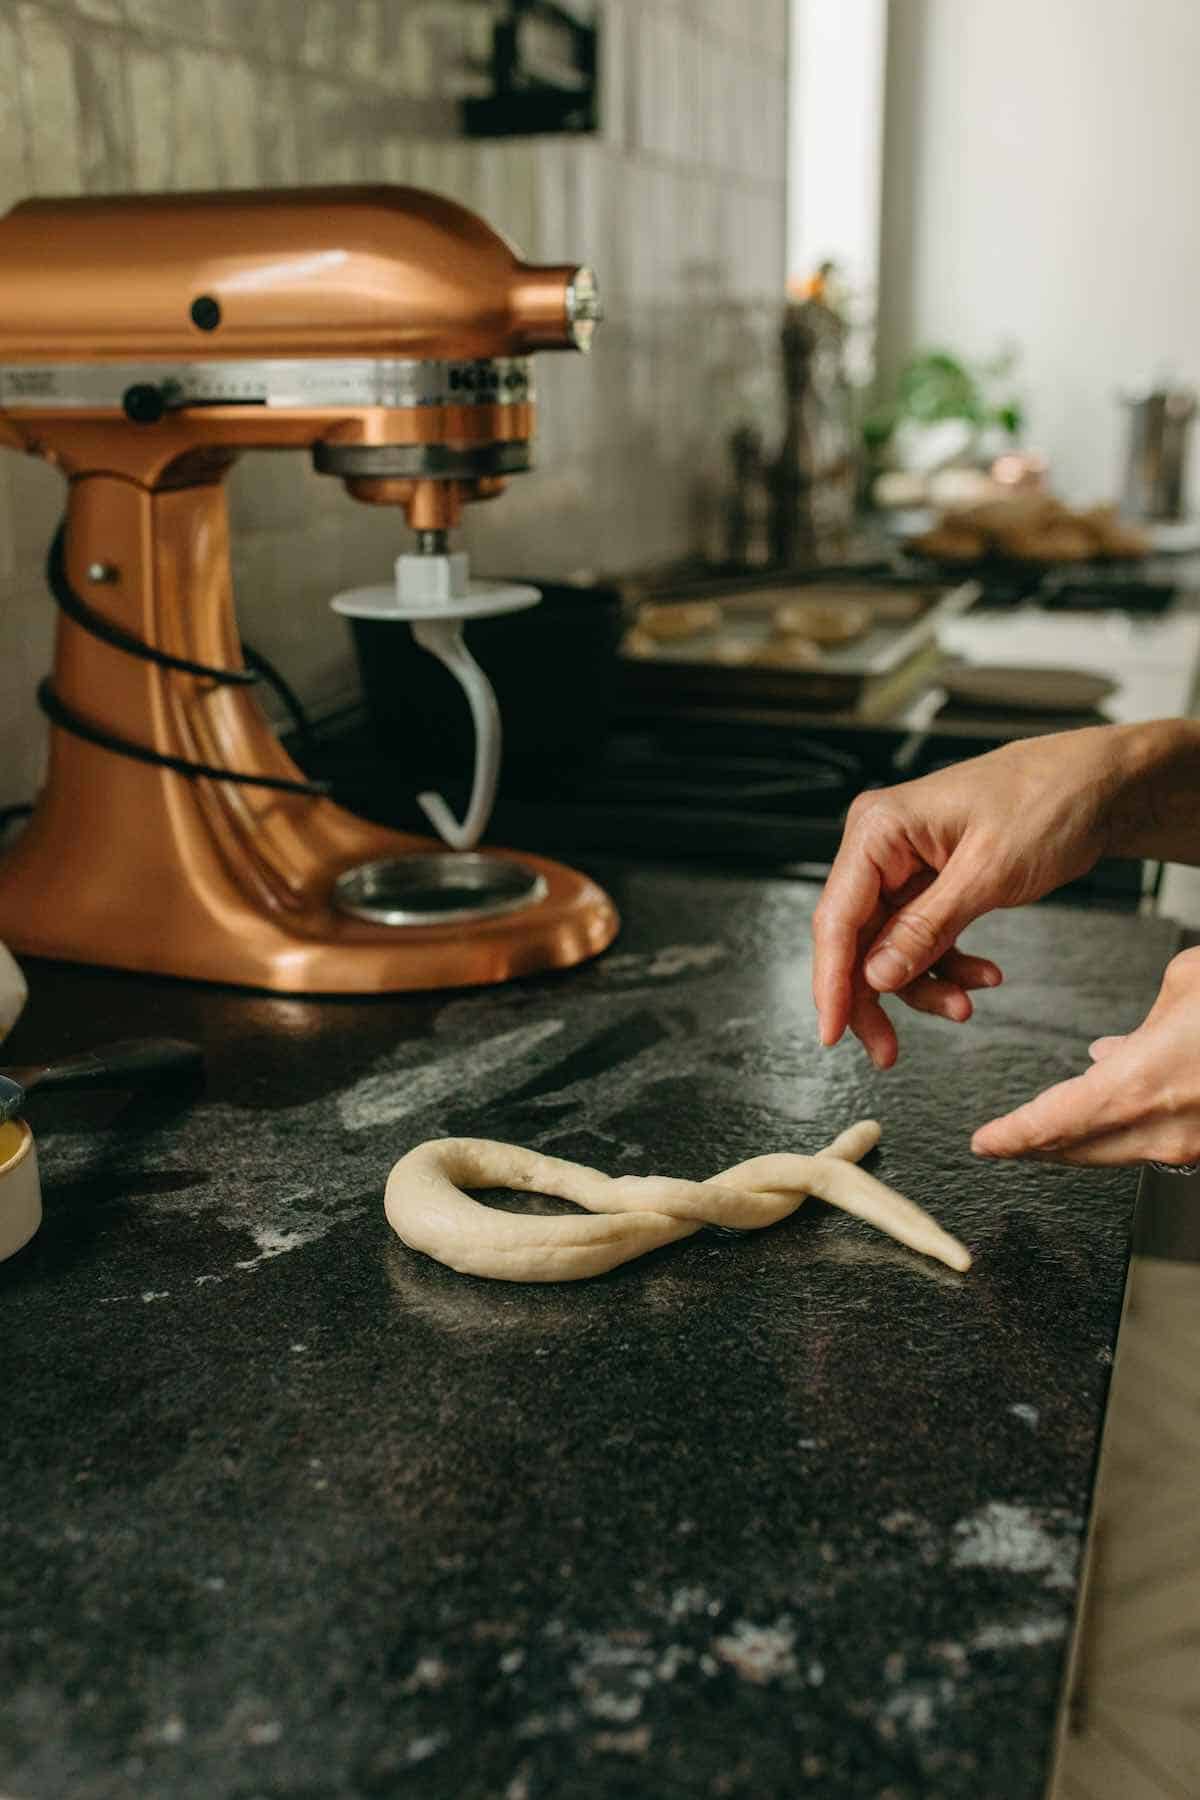 shaping German pretzels